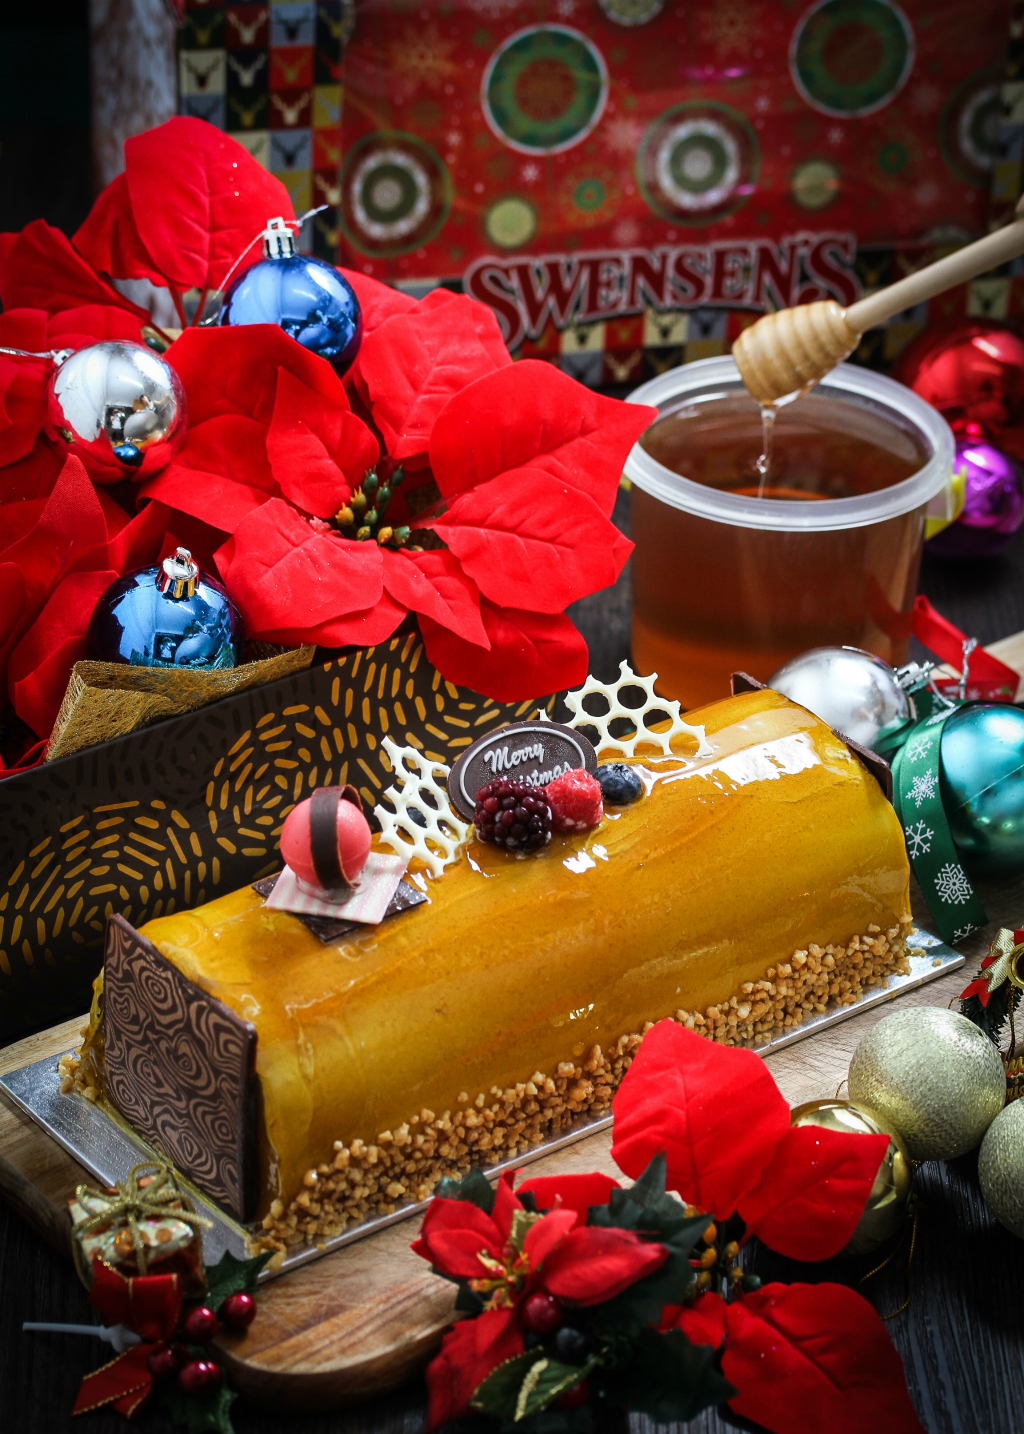 Swensens Honey Manukadamia